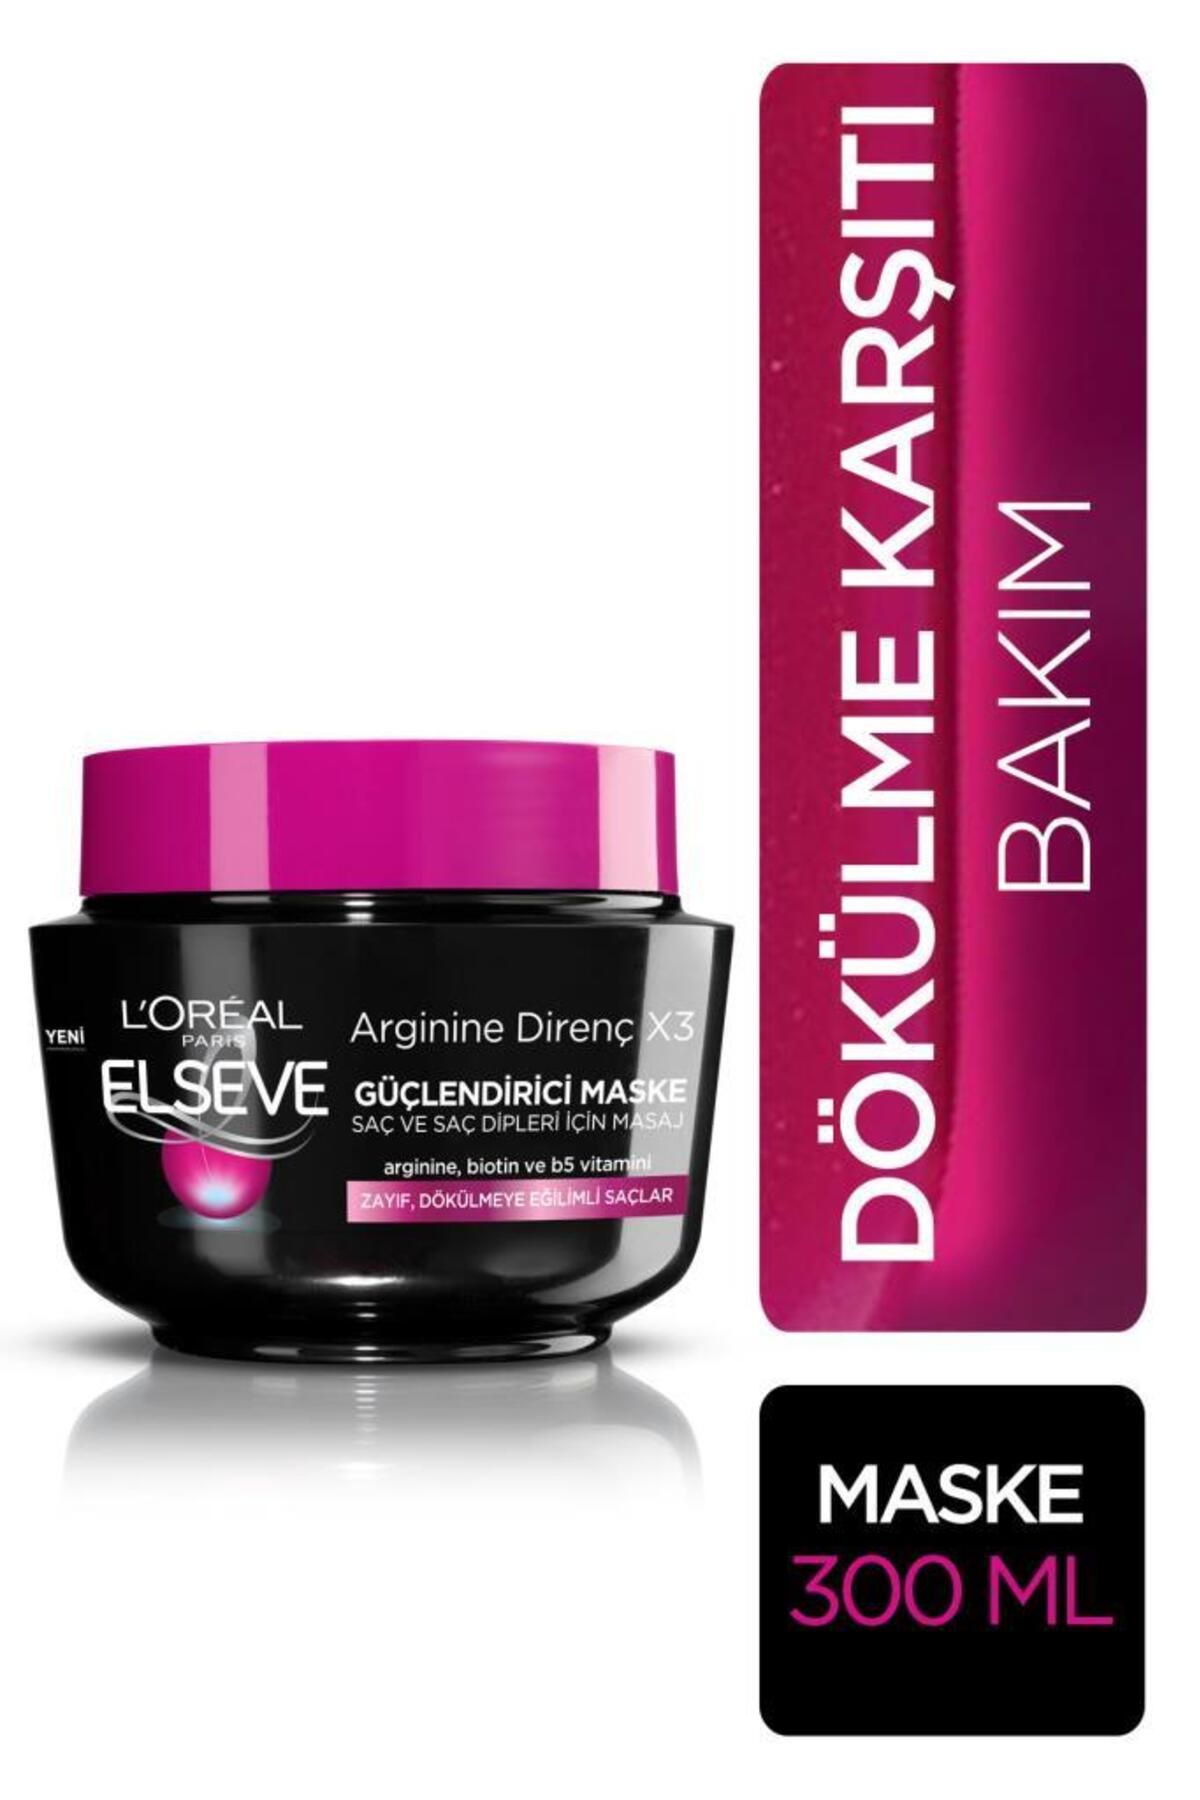 Elseve L'oréal Paris Arginine Direnç X3 Dökülme Karşıtı Maske 300 ml